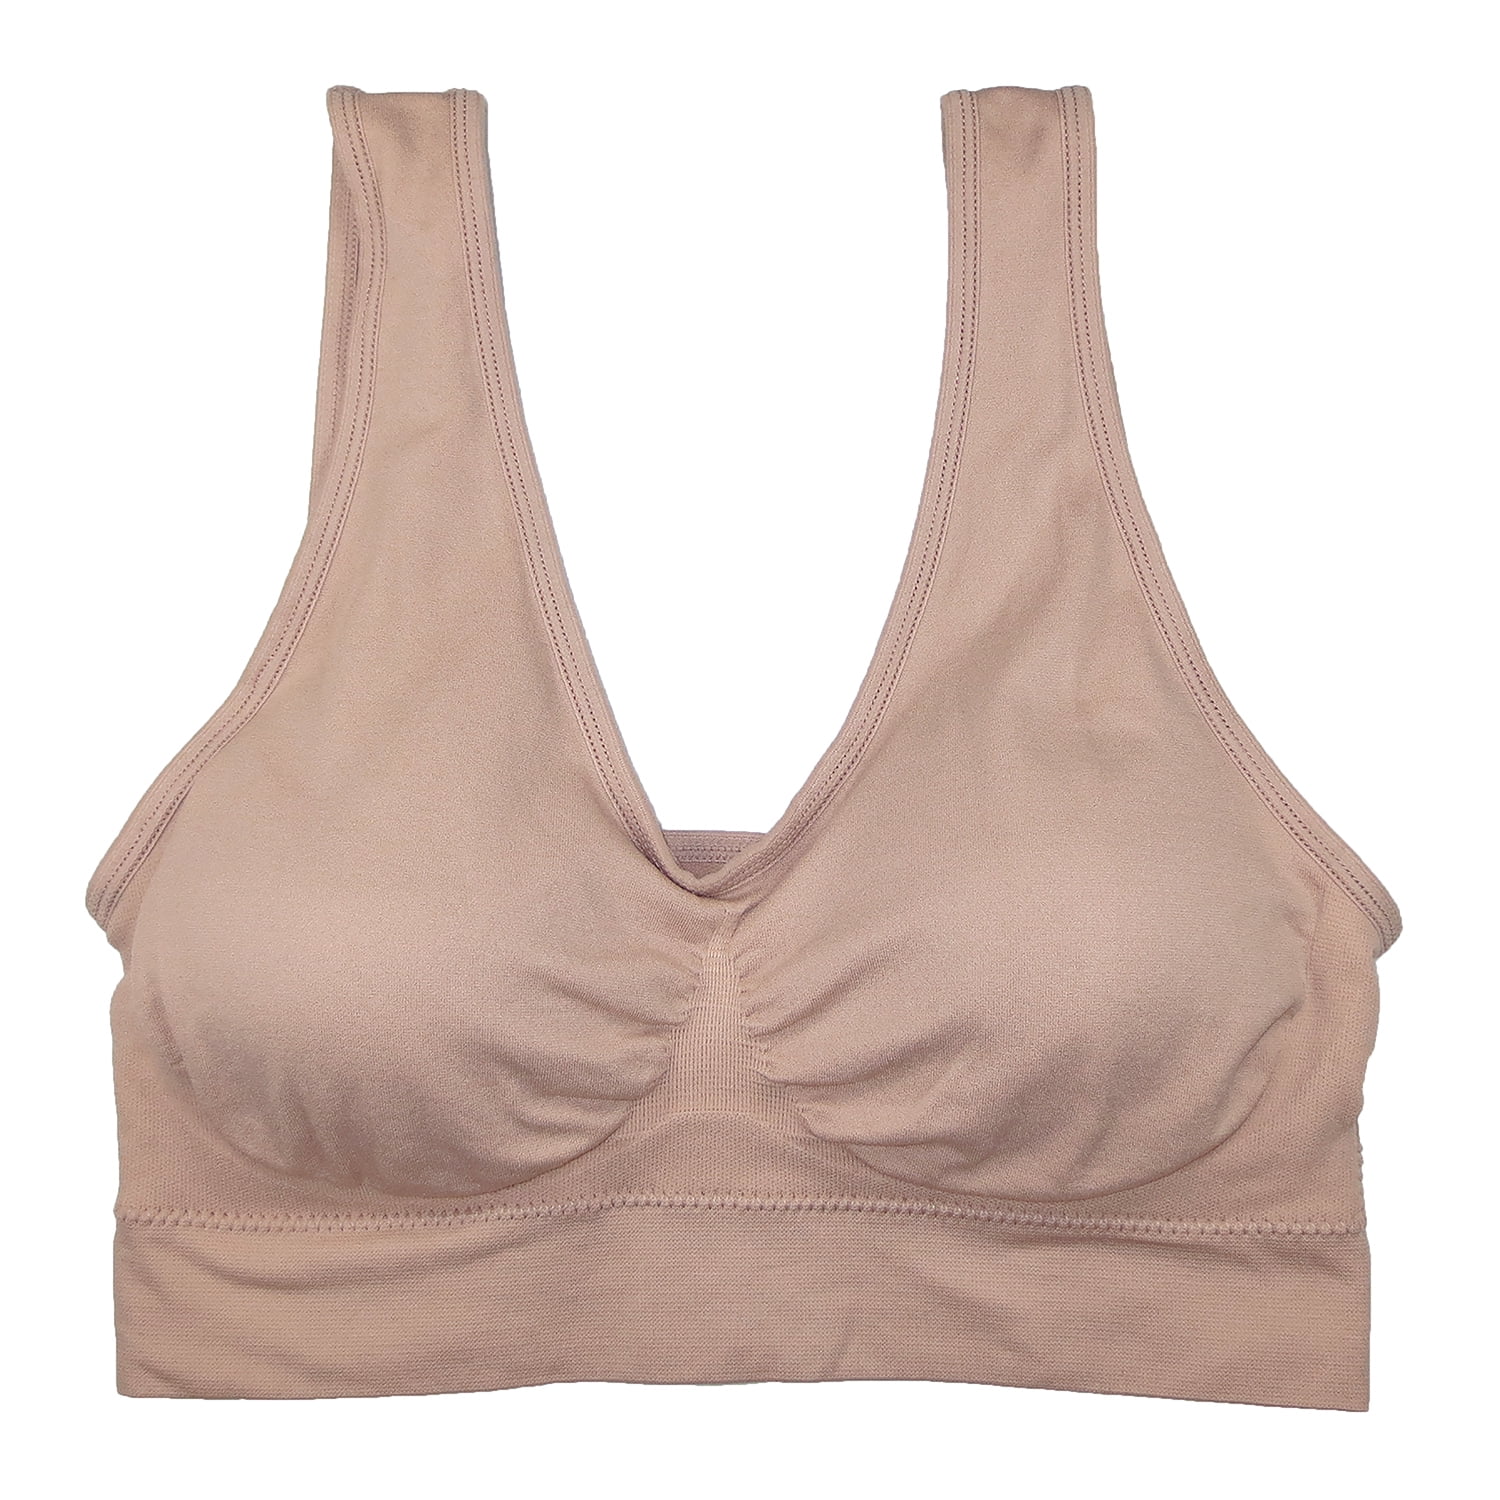 Coobie - Comfort bra, Small - Walmart.com